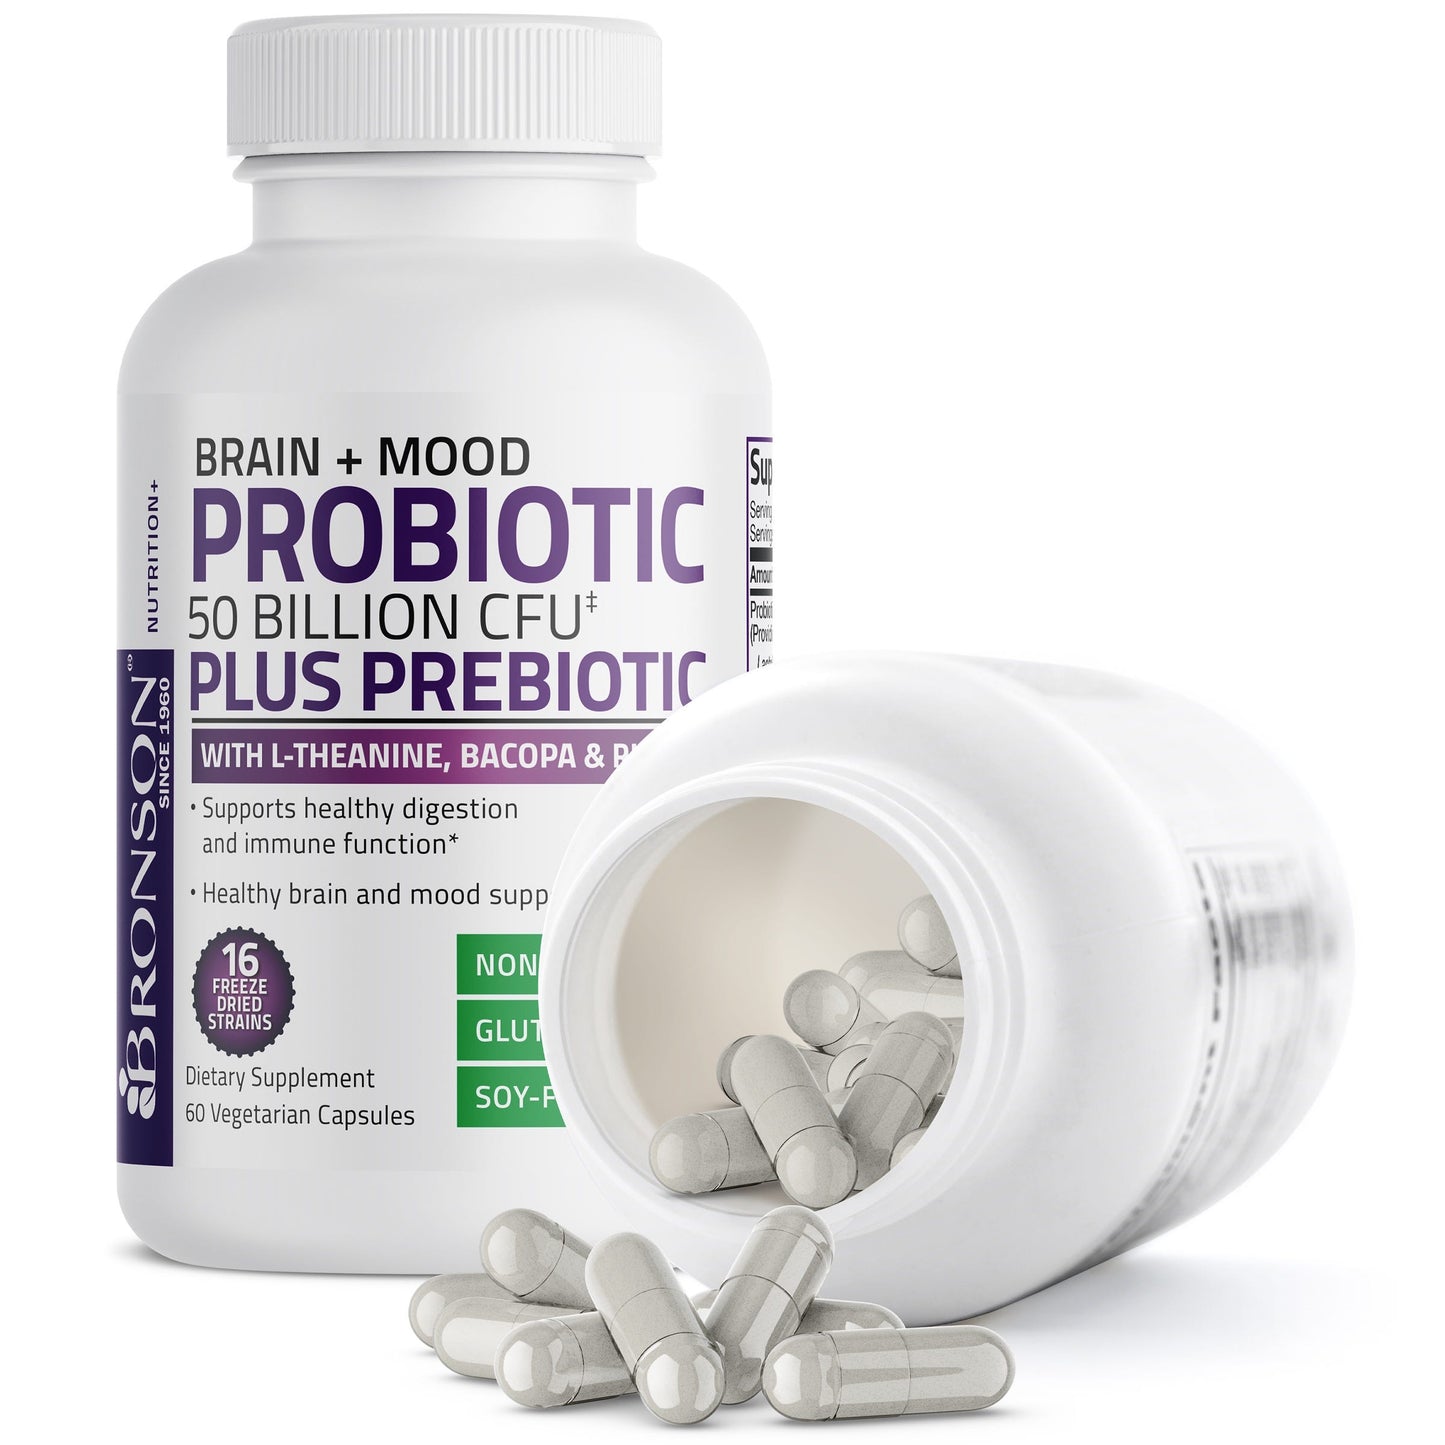 Probiotic Plus Prebiotic with L-Theanine, Bacopa & Rhodiola - 50 Billion CFU - 60 Vegetarian Capsules